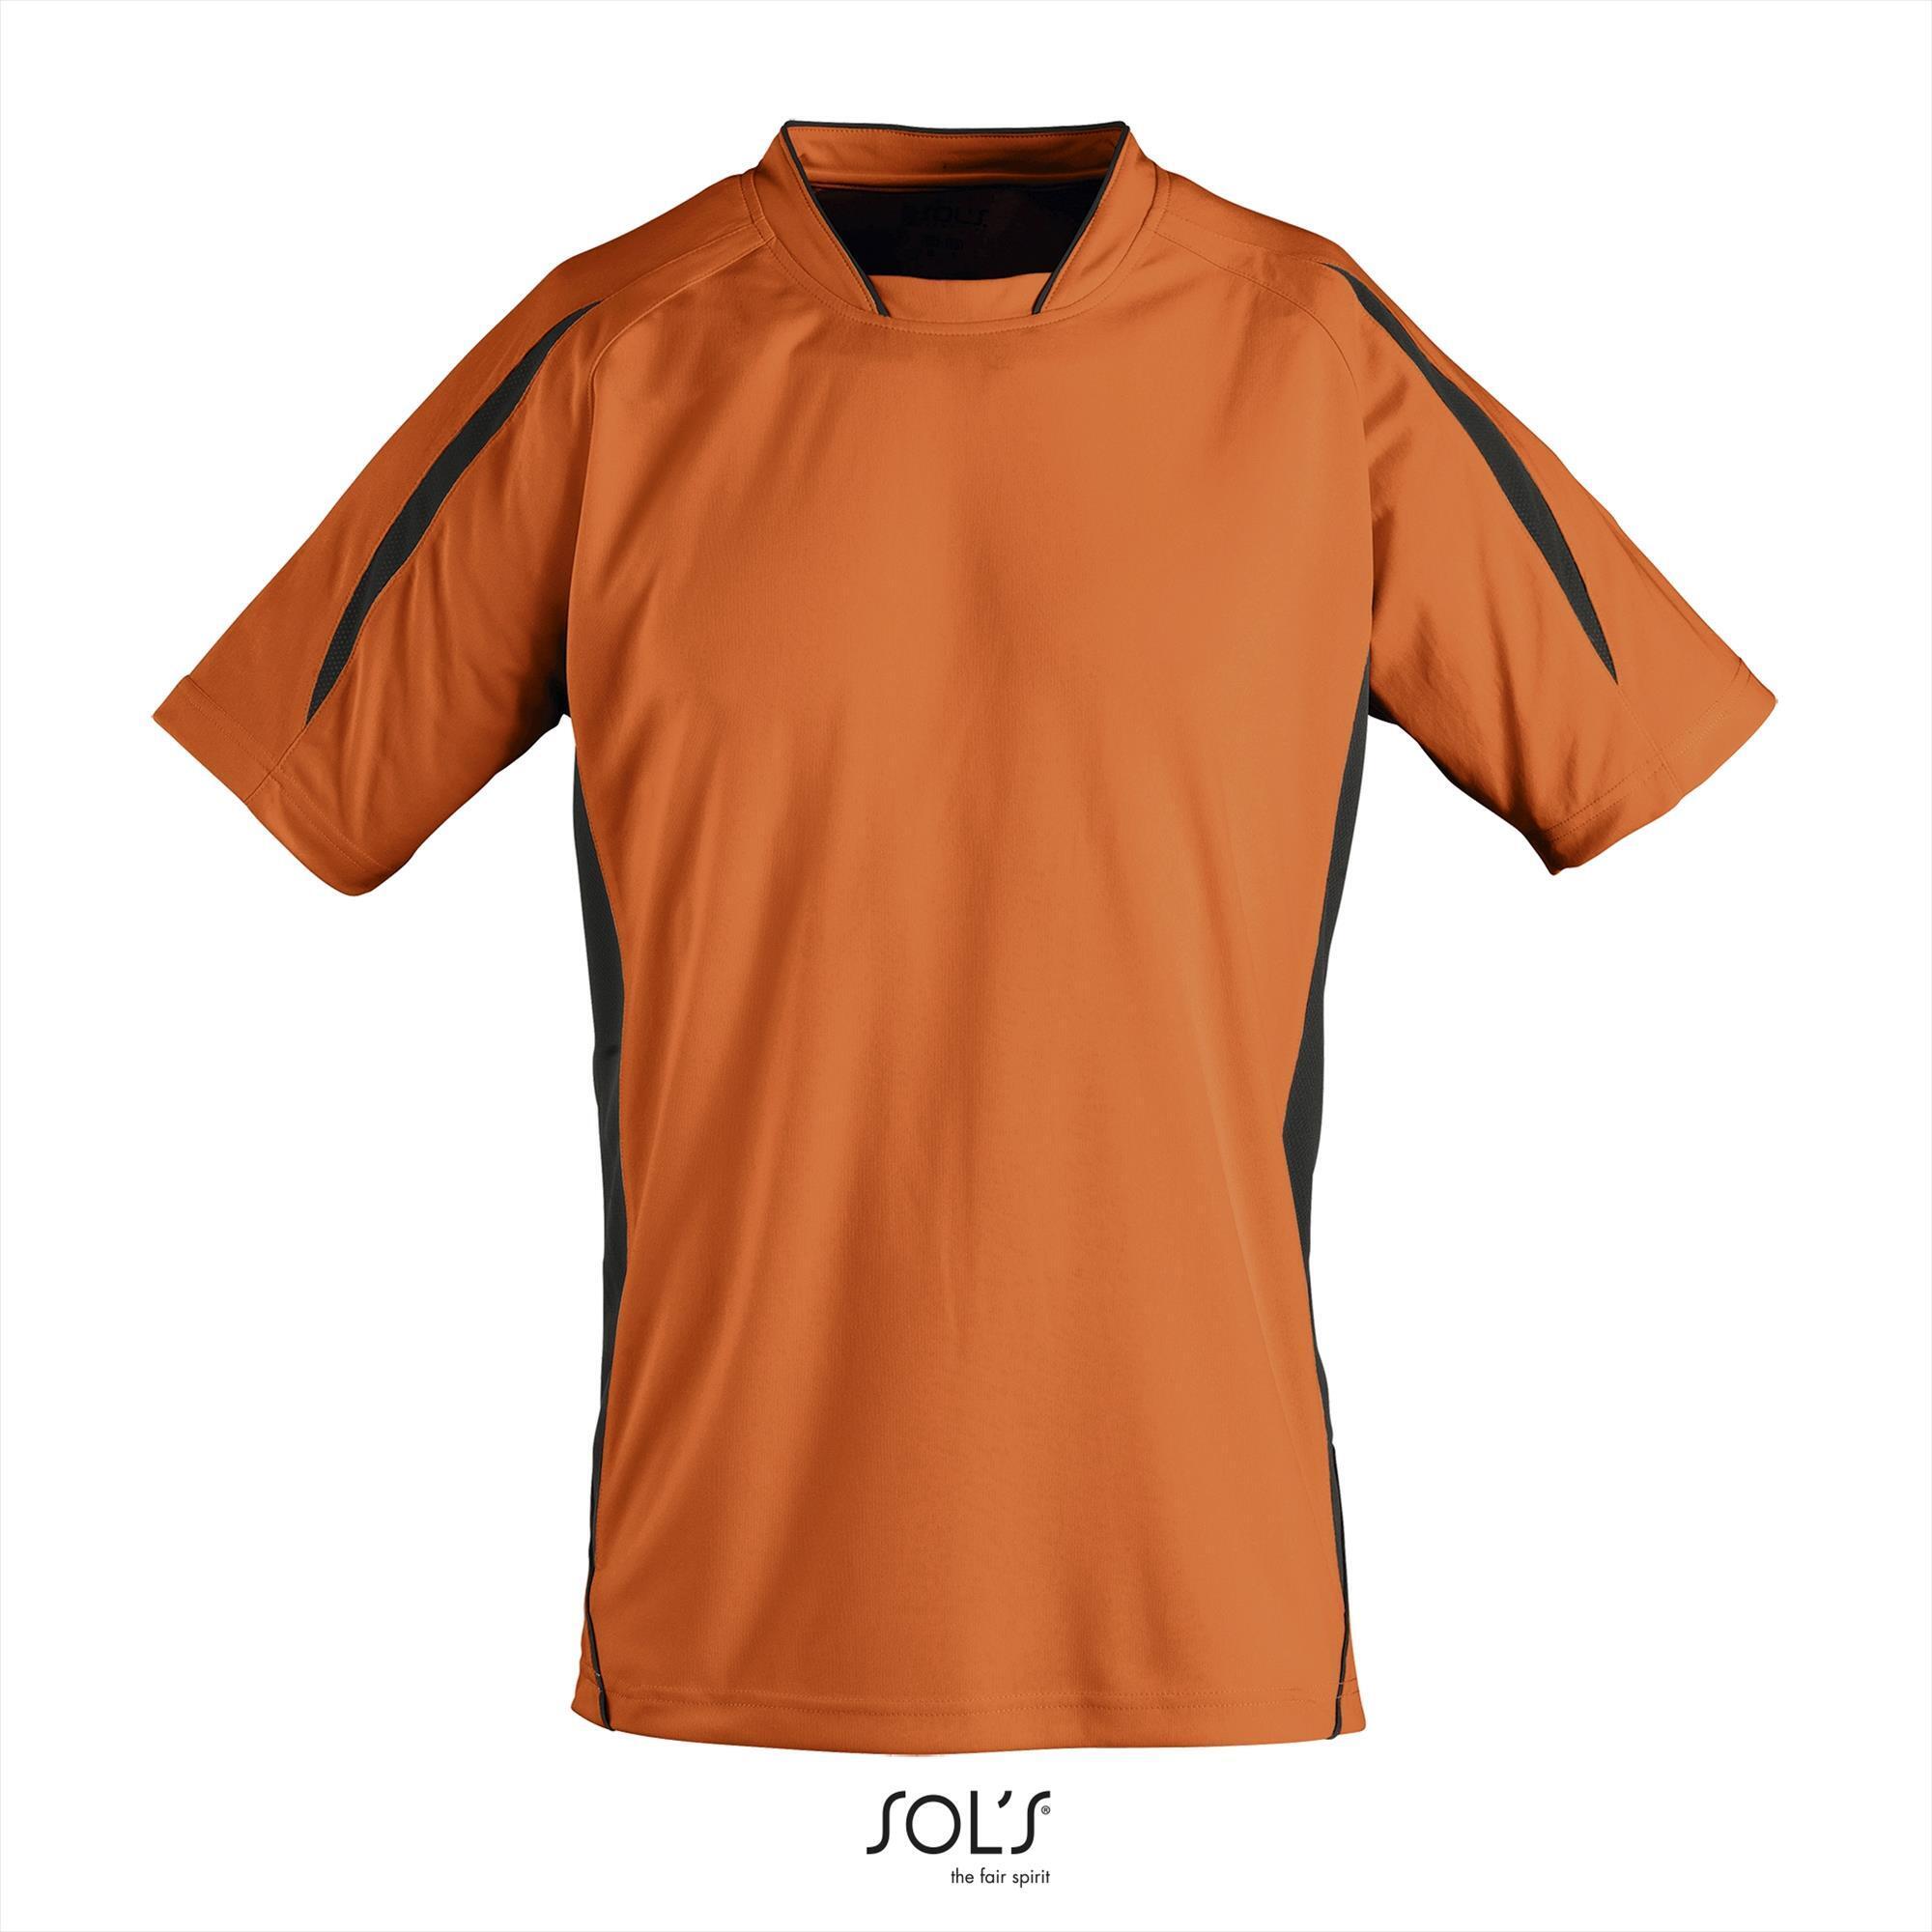 Kinder sportshirt orange/black sportief sport shirt personaliseren sport shirt oranje voetbal Koningsdag